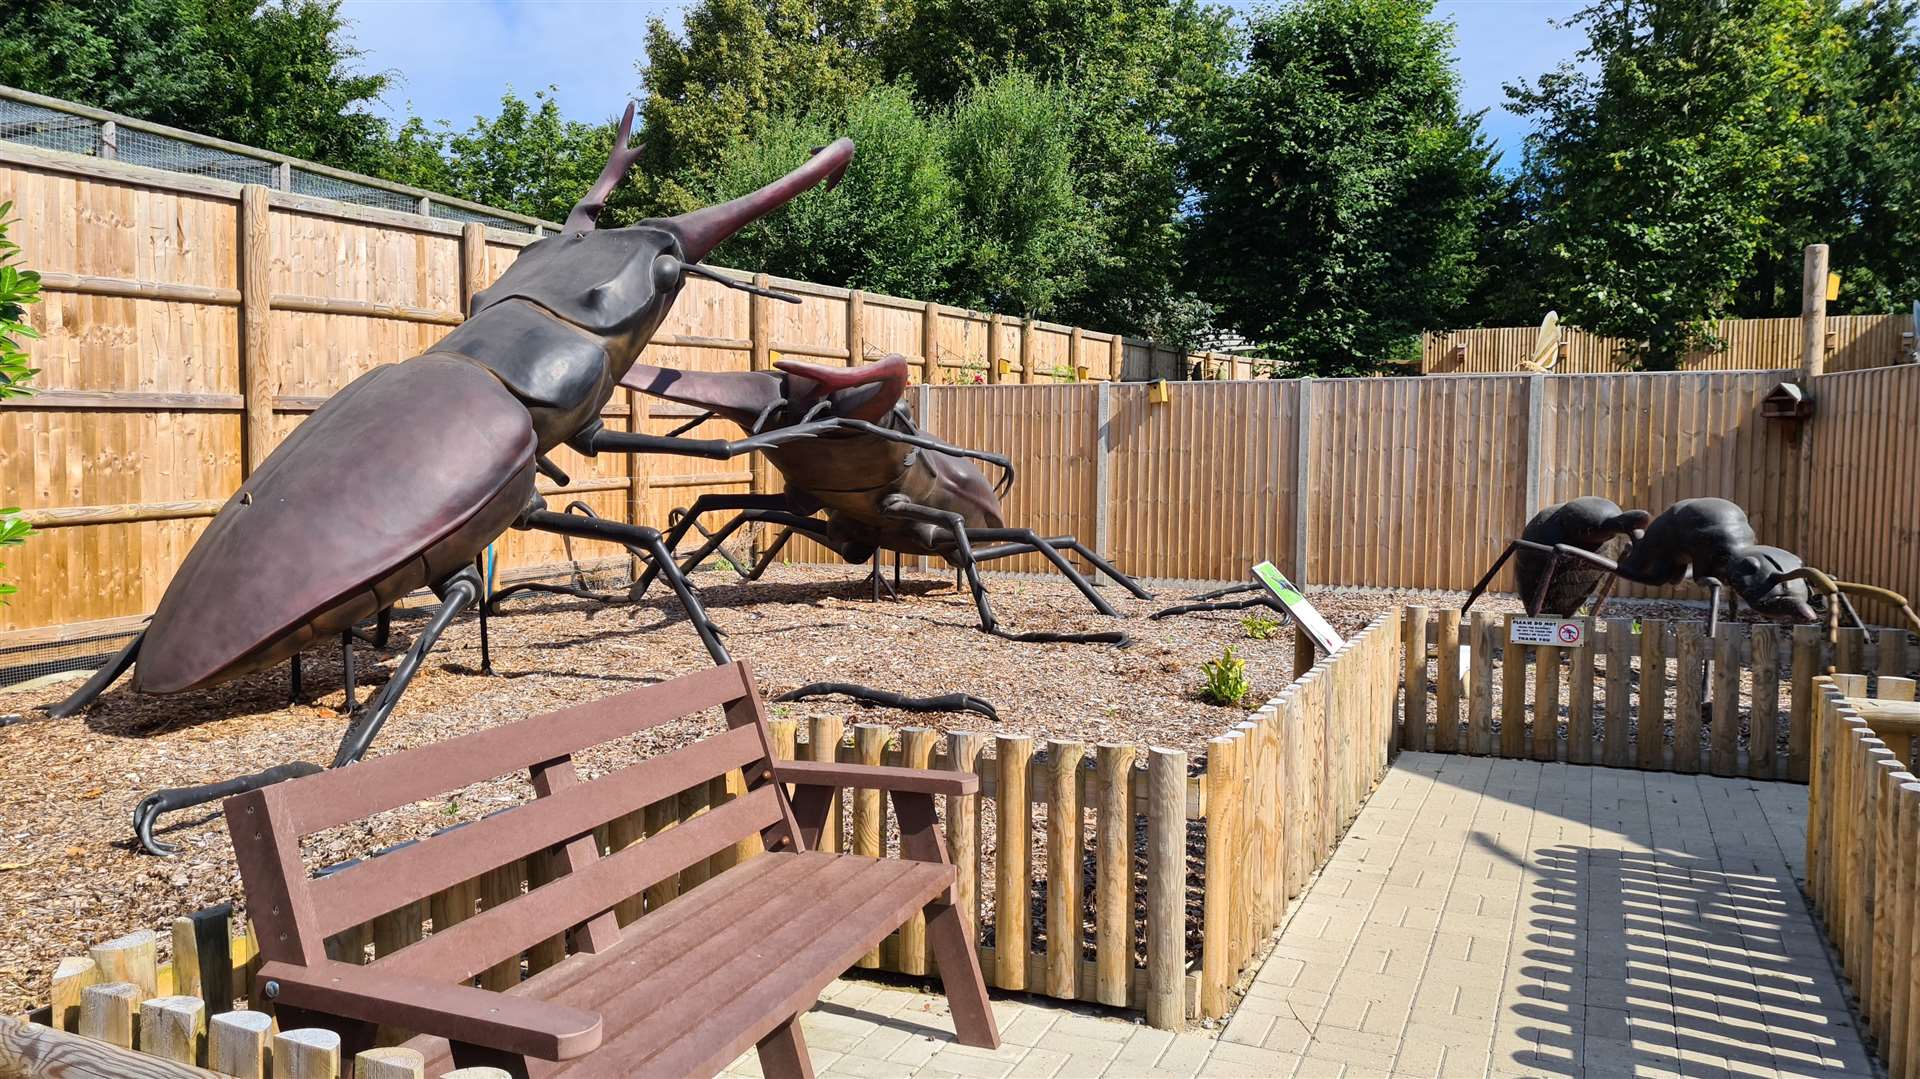 The Bug Garden at Wingham has some huge bug sculptures